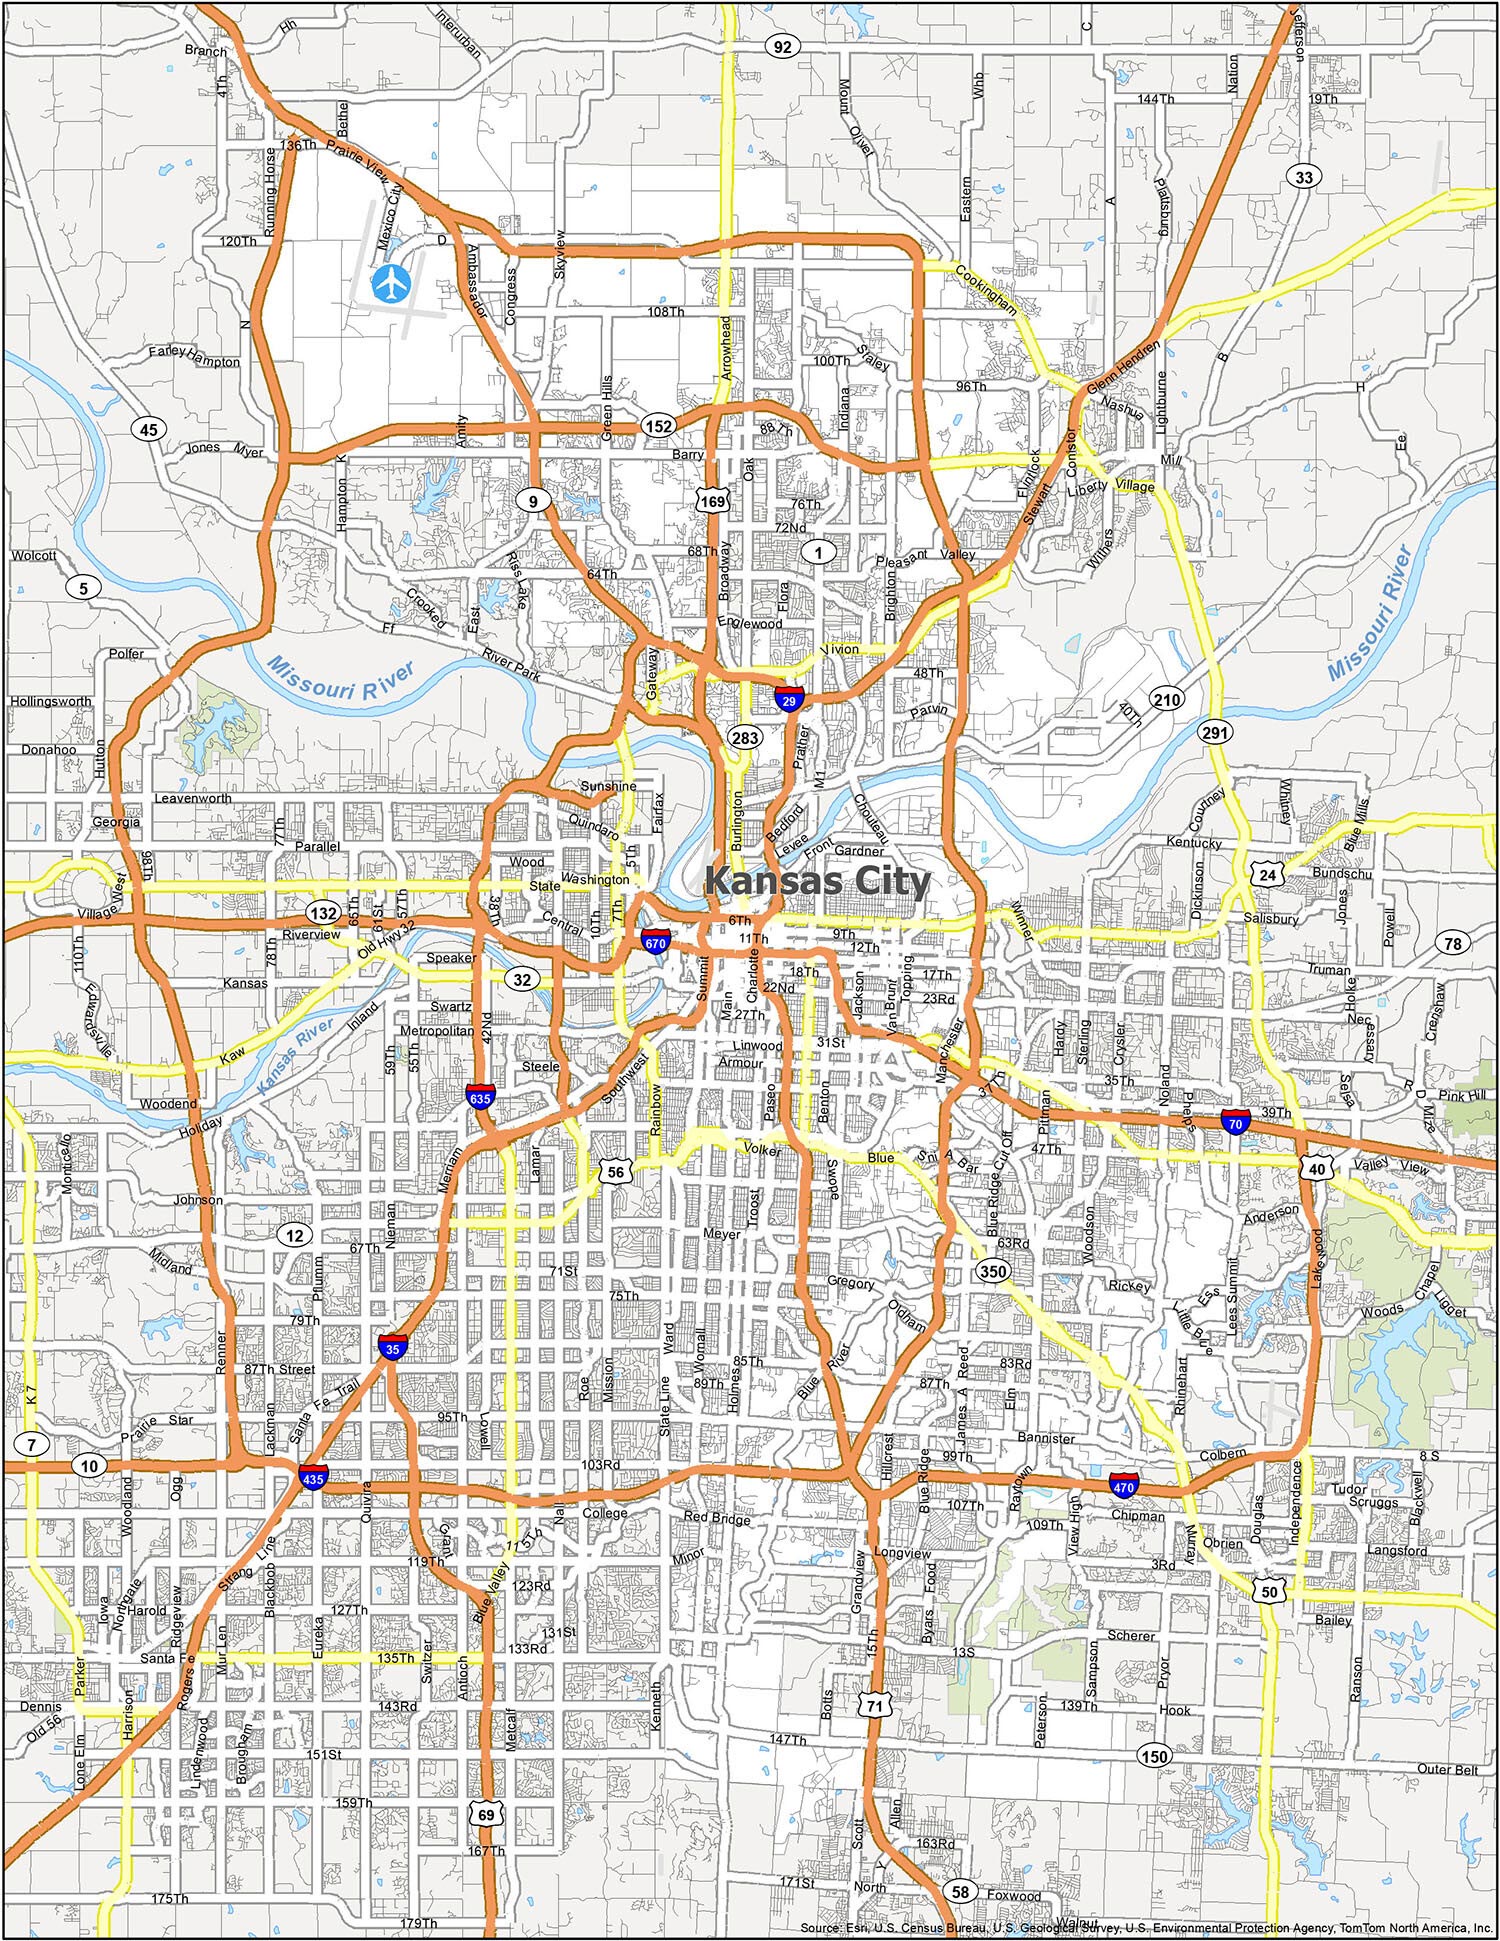 Google Map of Kansas City, Missouri, USA - Nations Online Project